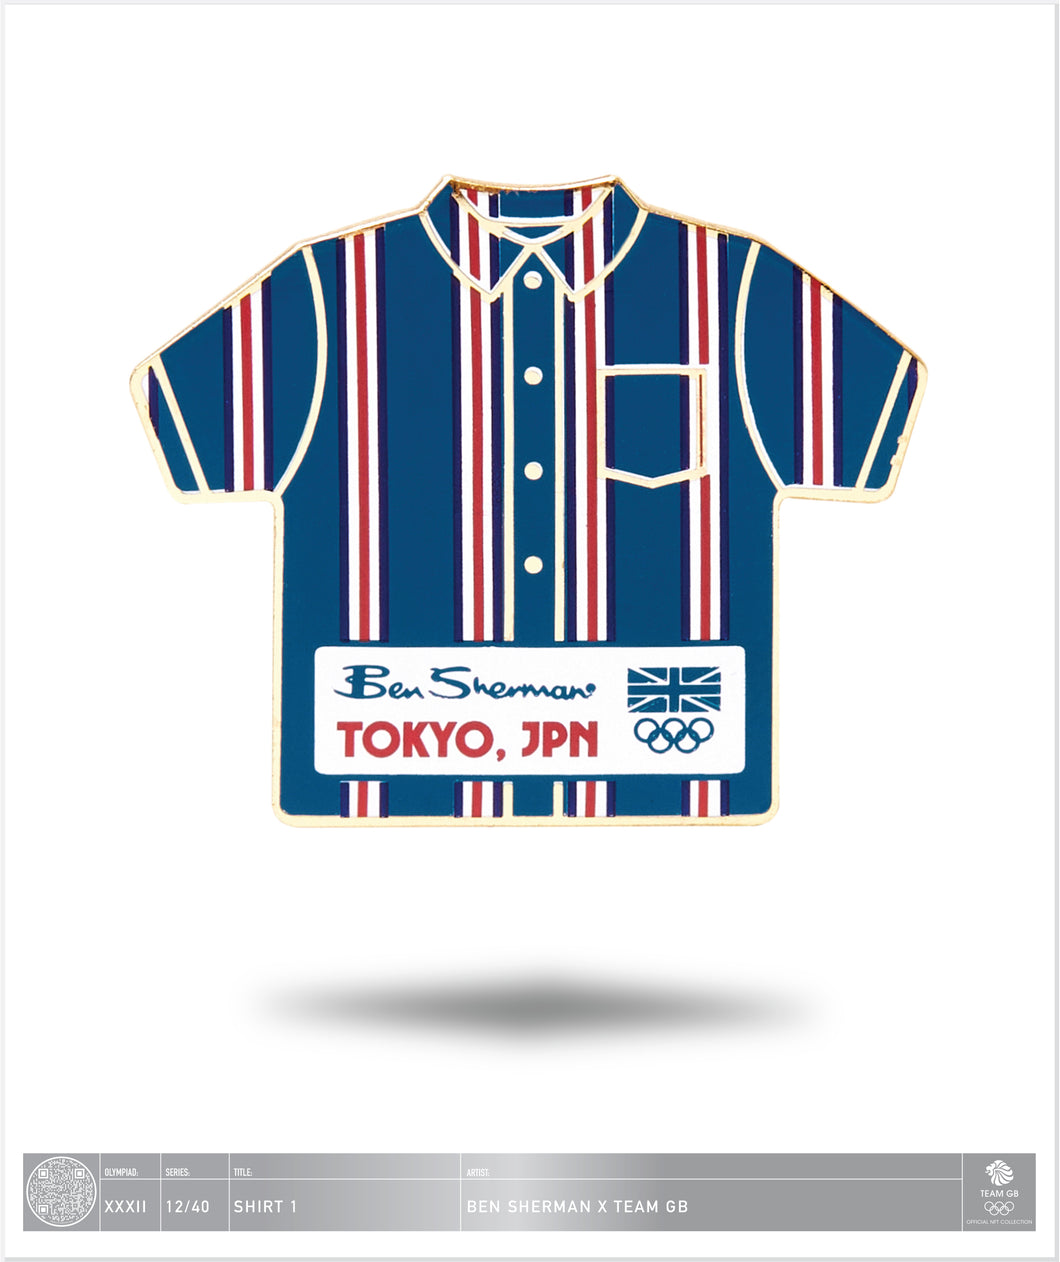 Ben Sherman Tokyo - Shirt 1 - 12 / 40